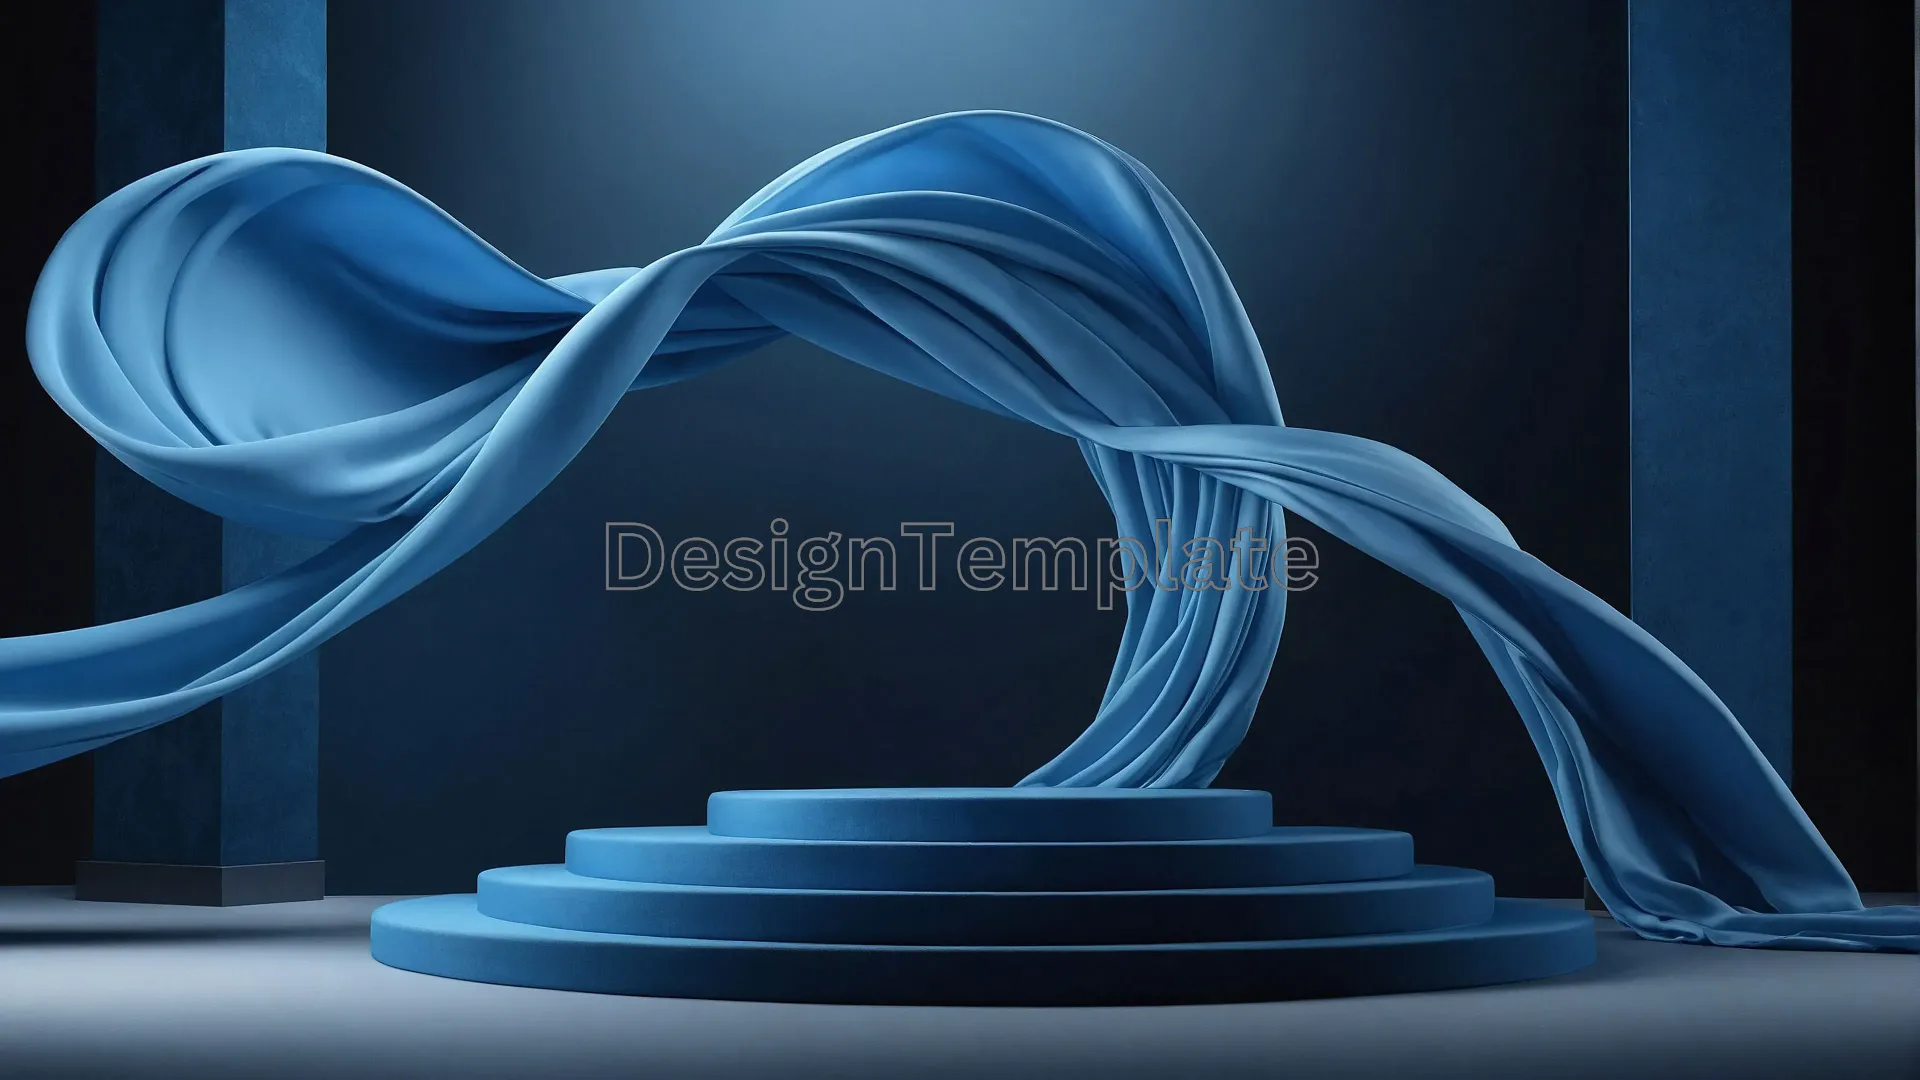 Vibrant Silk Fabric and 3D Podium Background